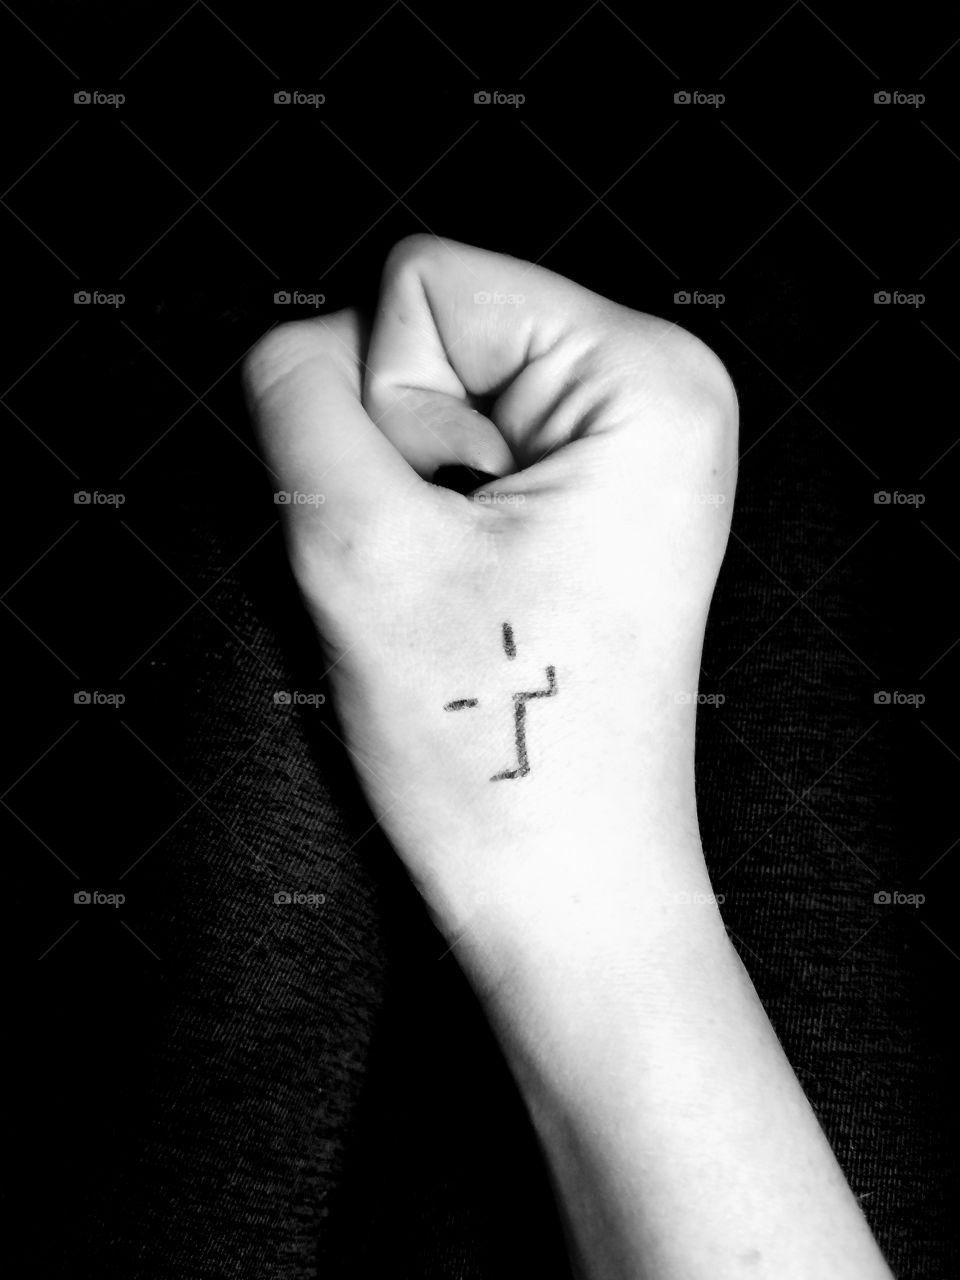 Cross tattoo on hand, black and white